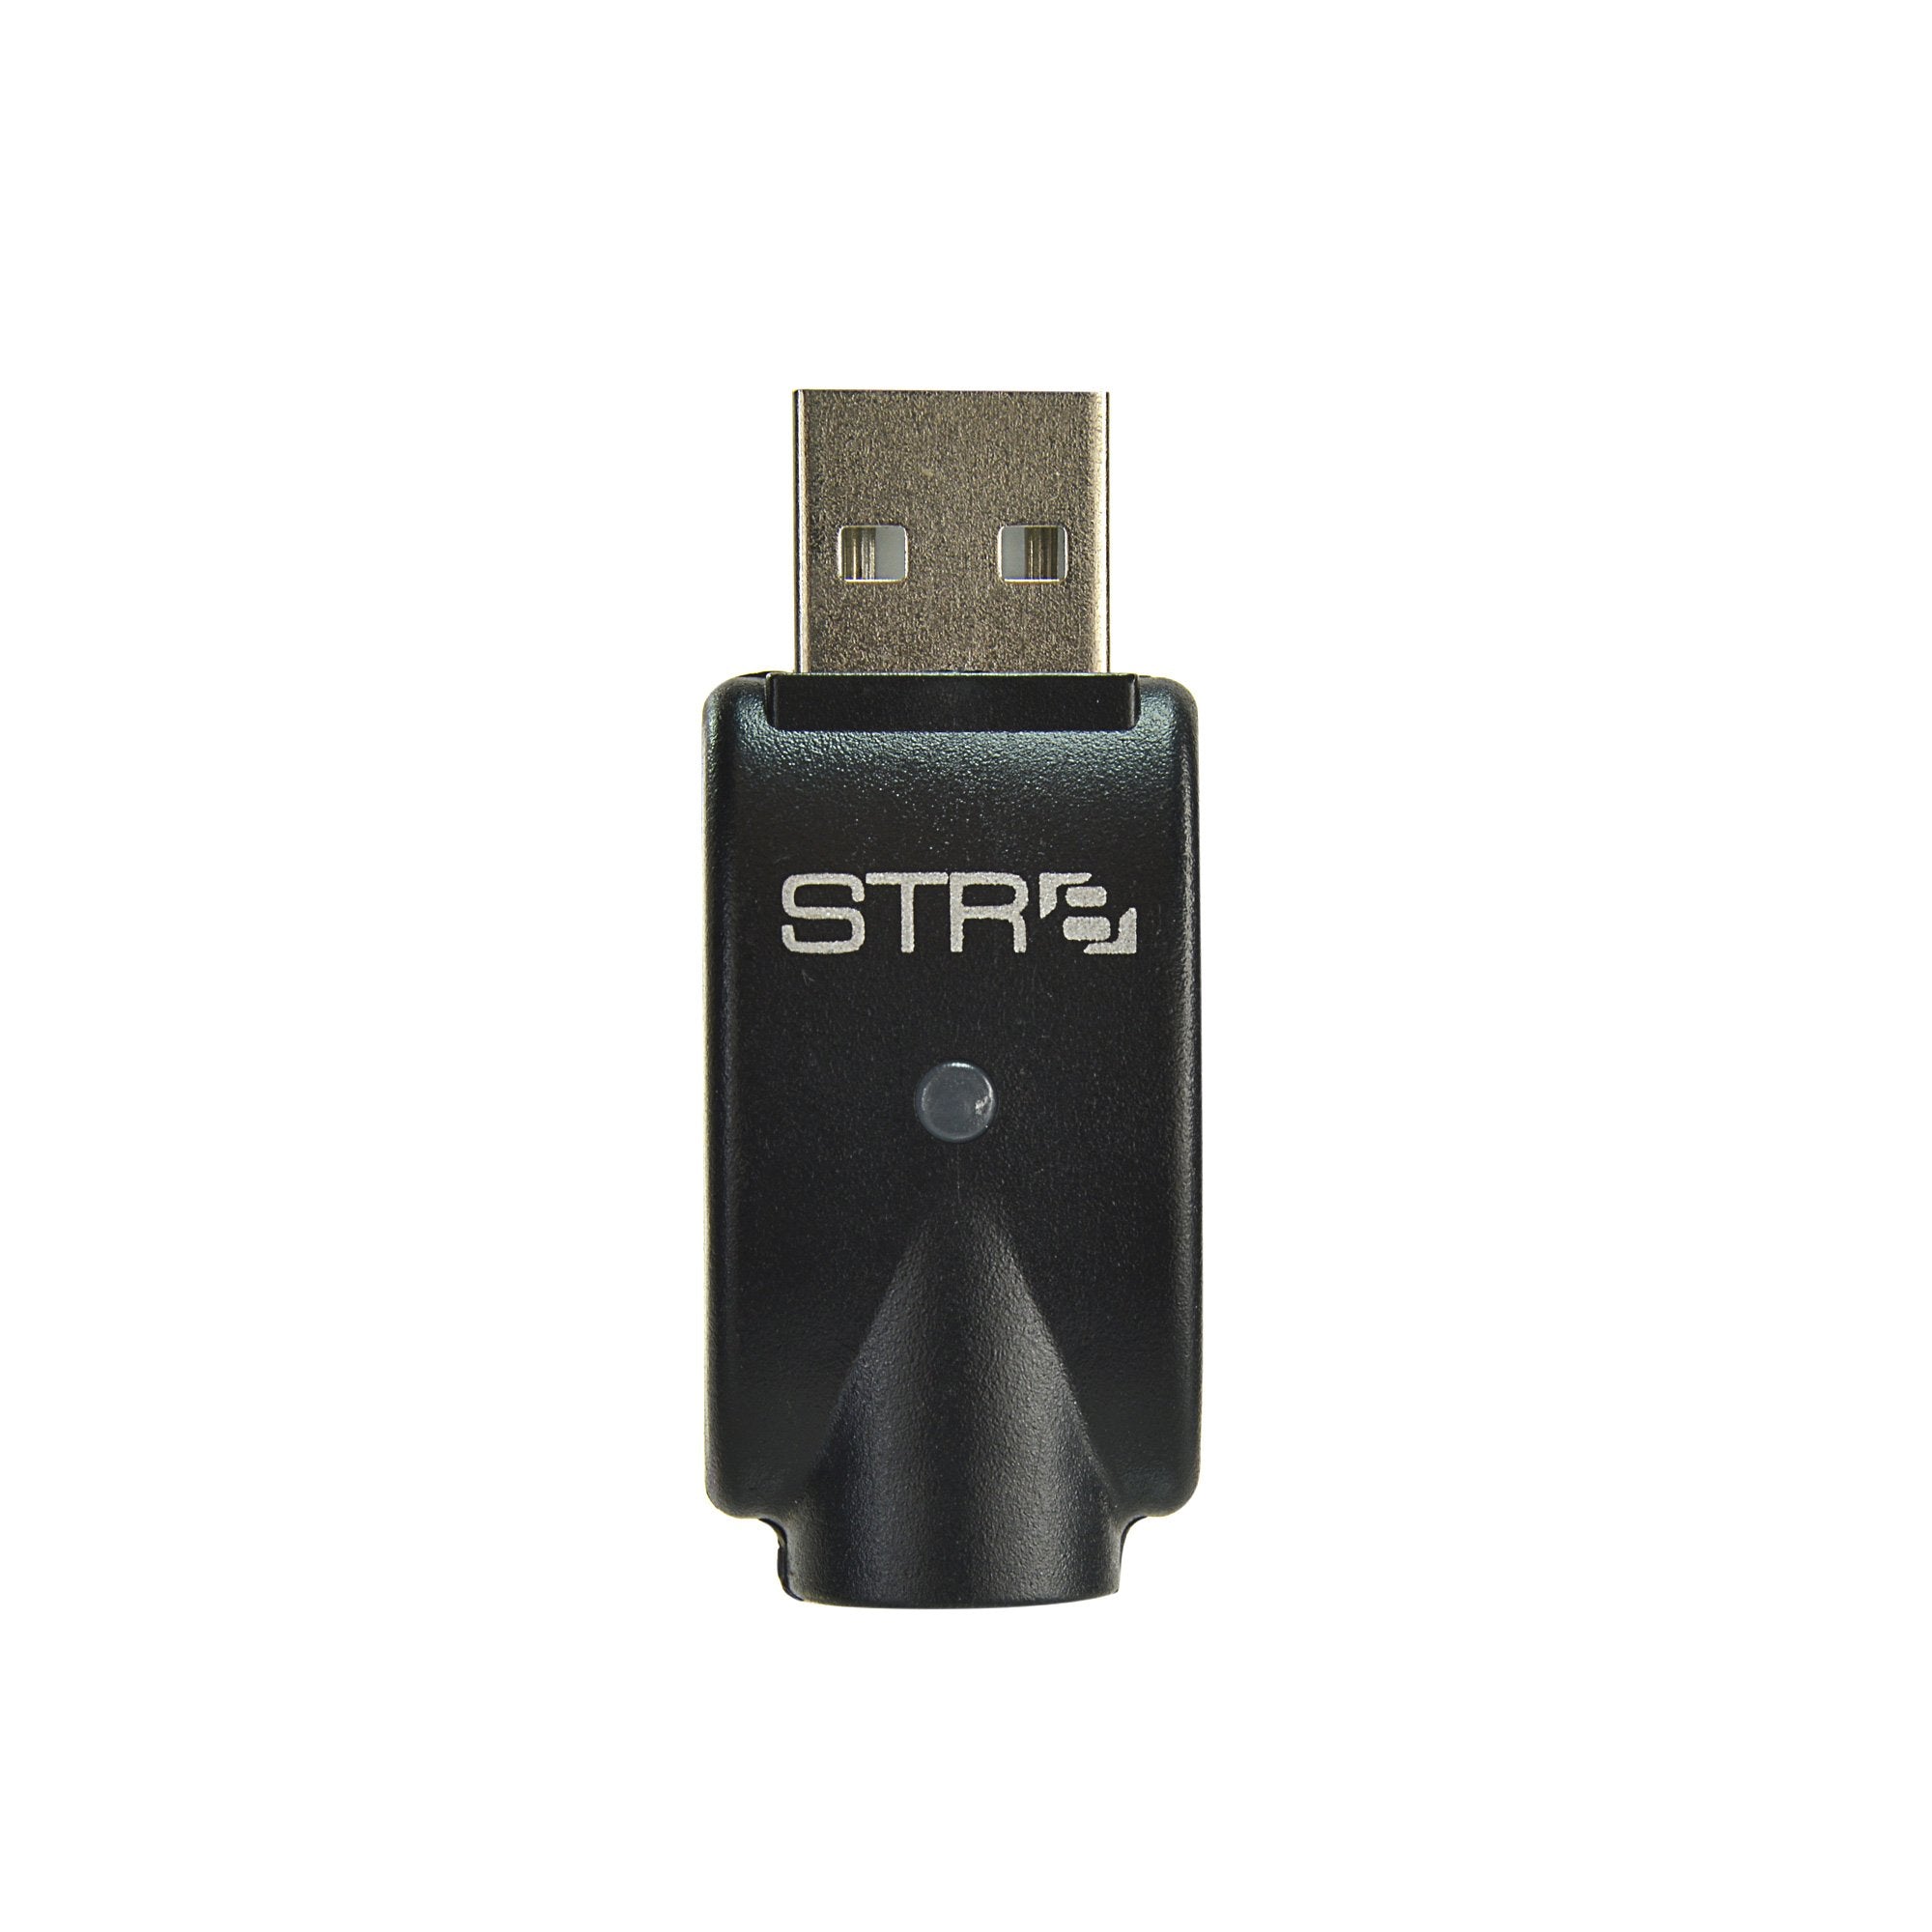 STR8 | 'Retail Display' Slim Batteries | Draw/Switch/Revolve - Black & Silver - 24 Count - 9